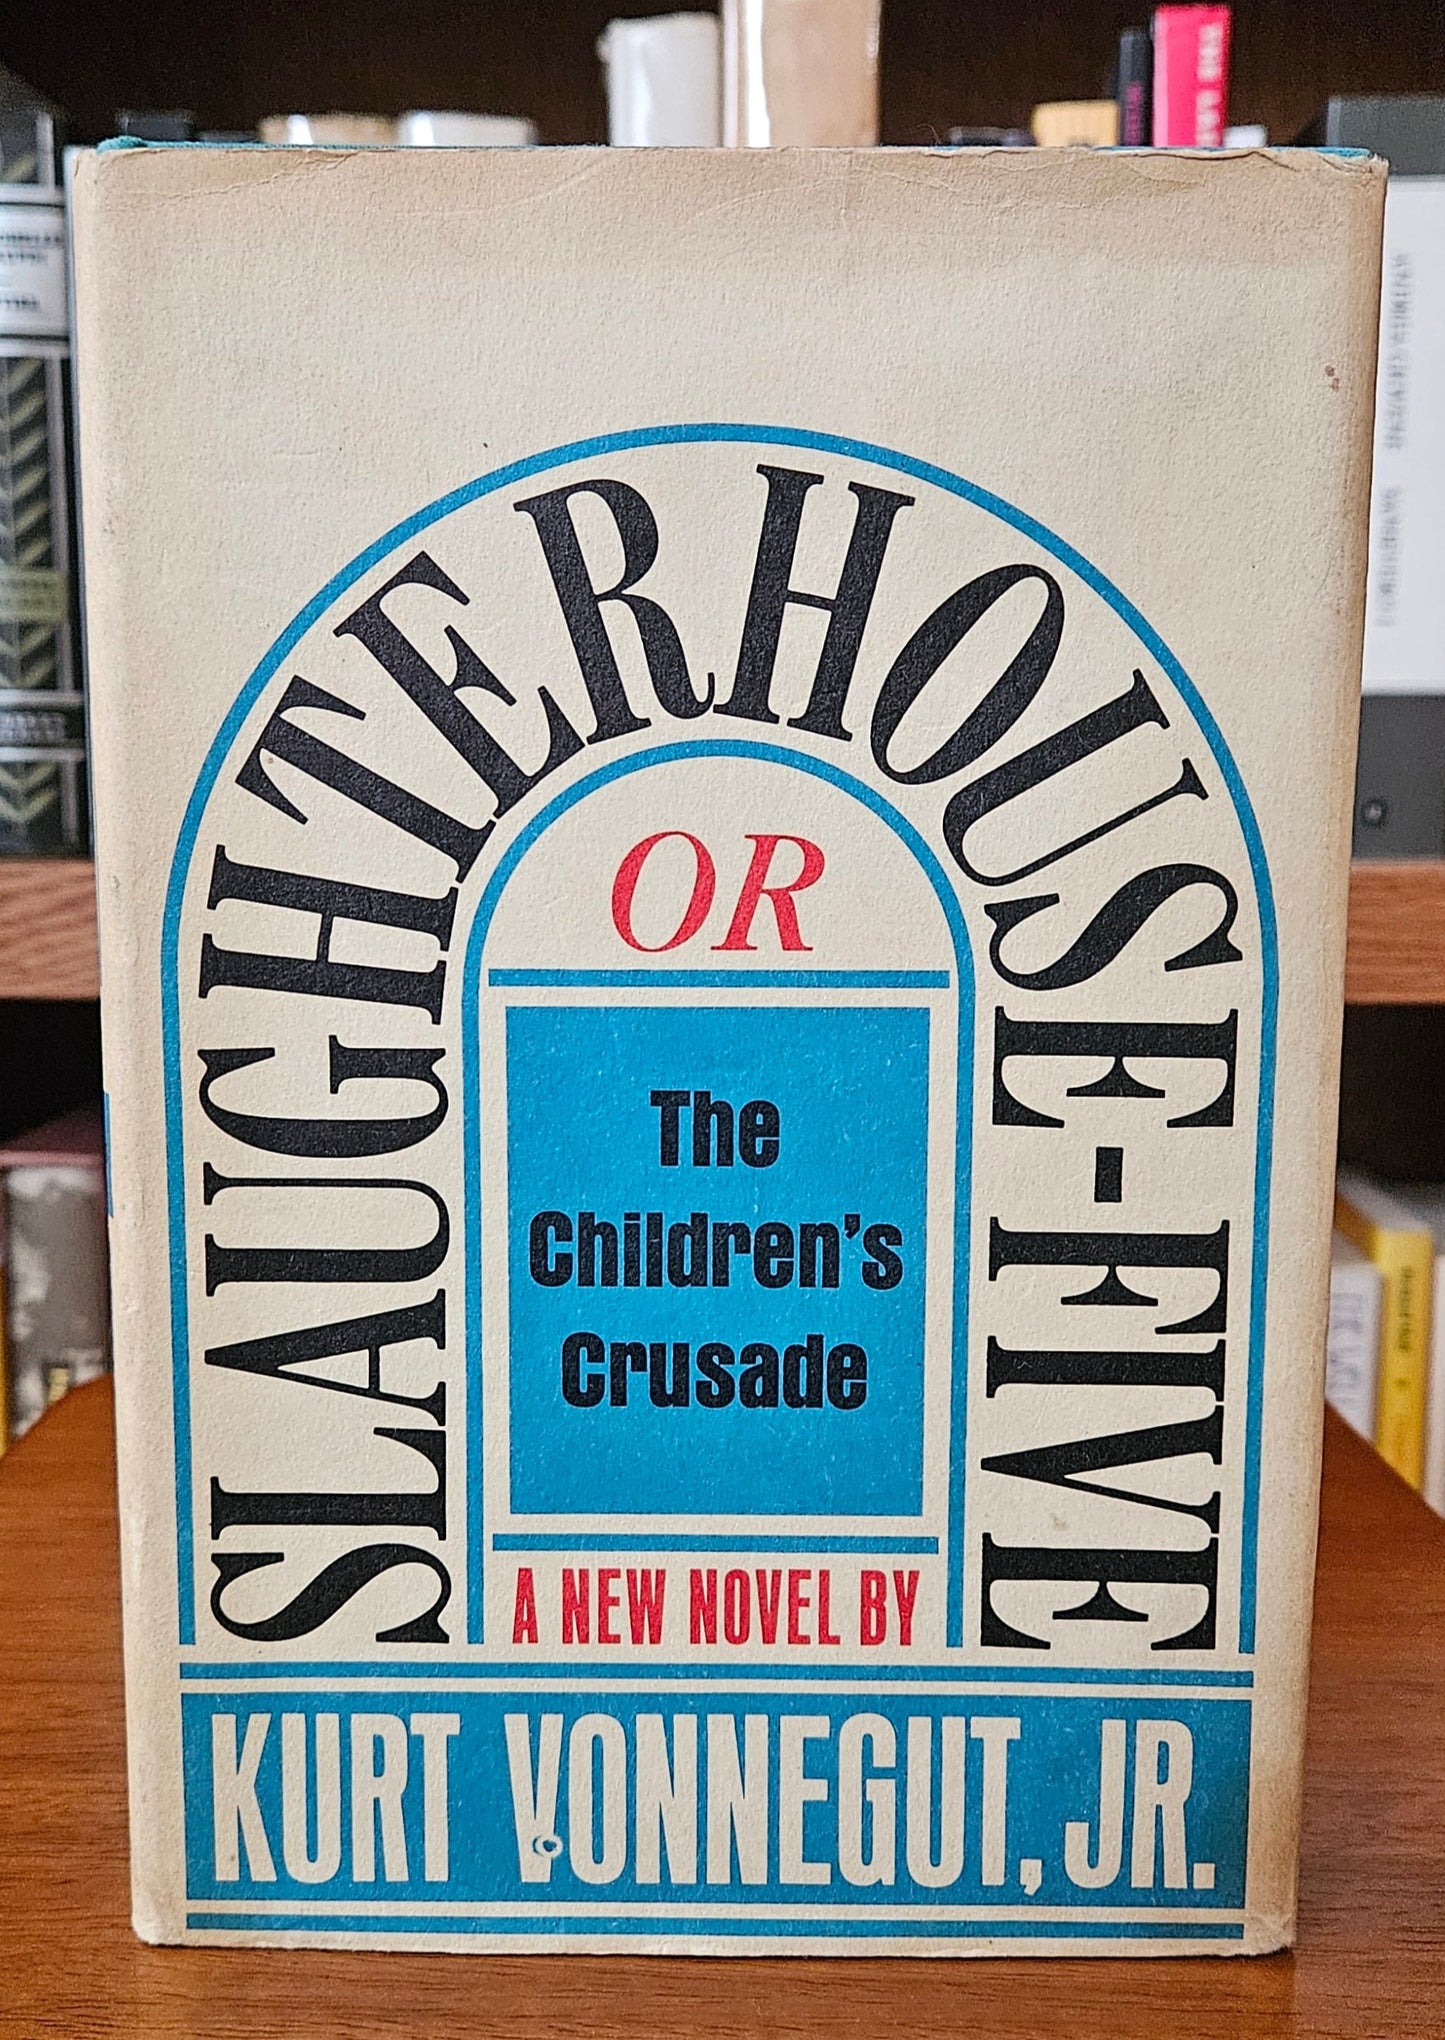 Kurt Vonnegut - Slaughterhouse Five or The Children's Crusade